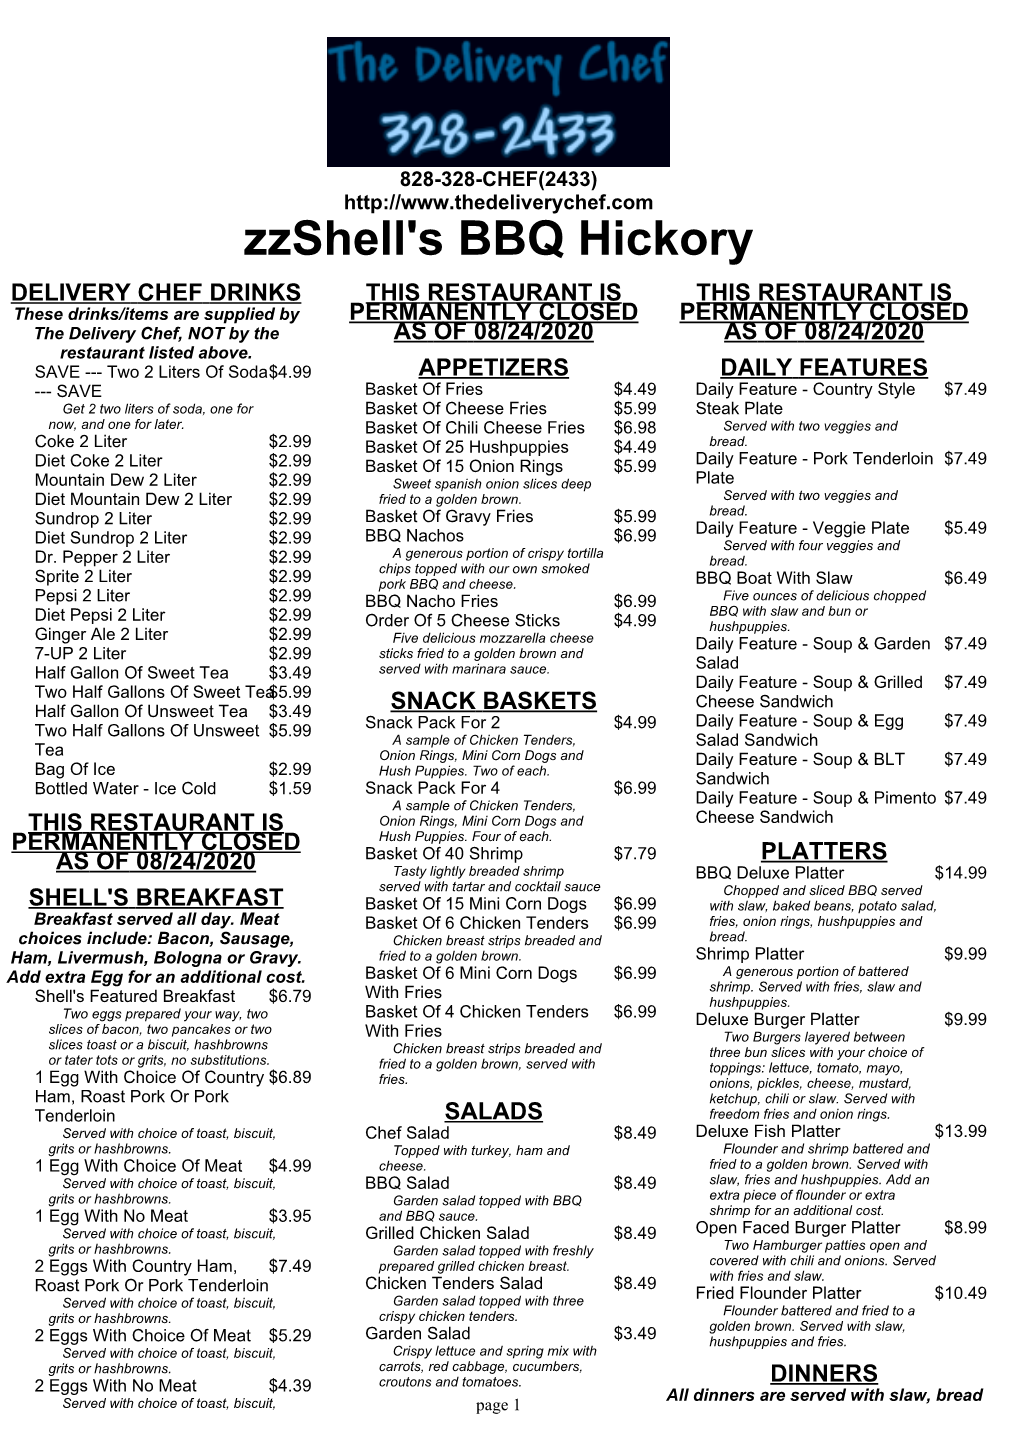 Zzshell's BBQ Hickory